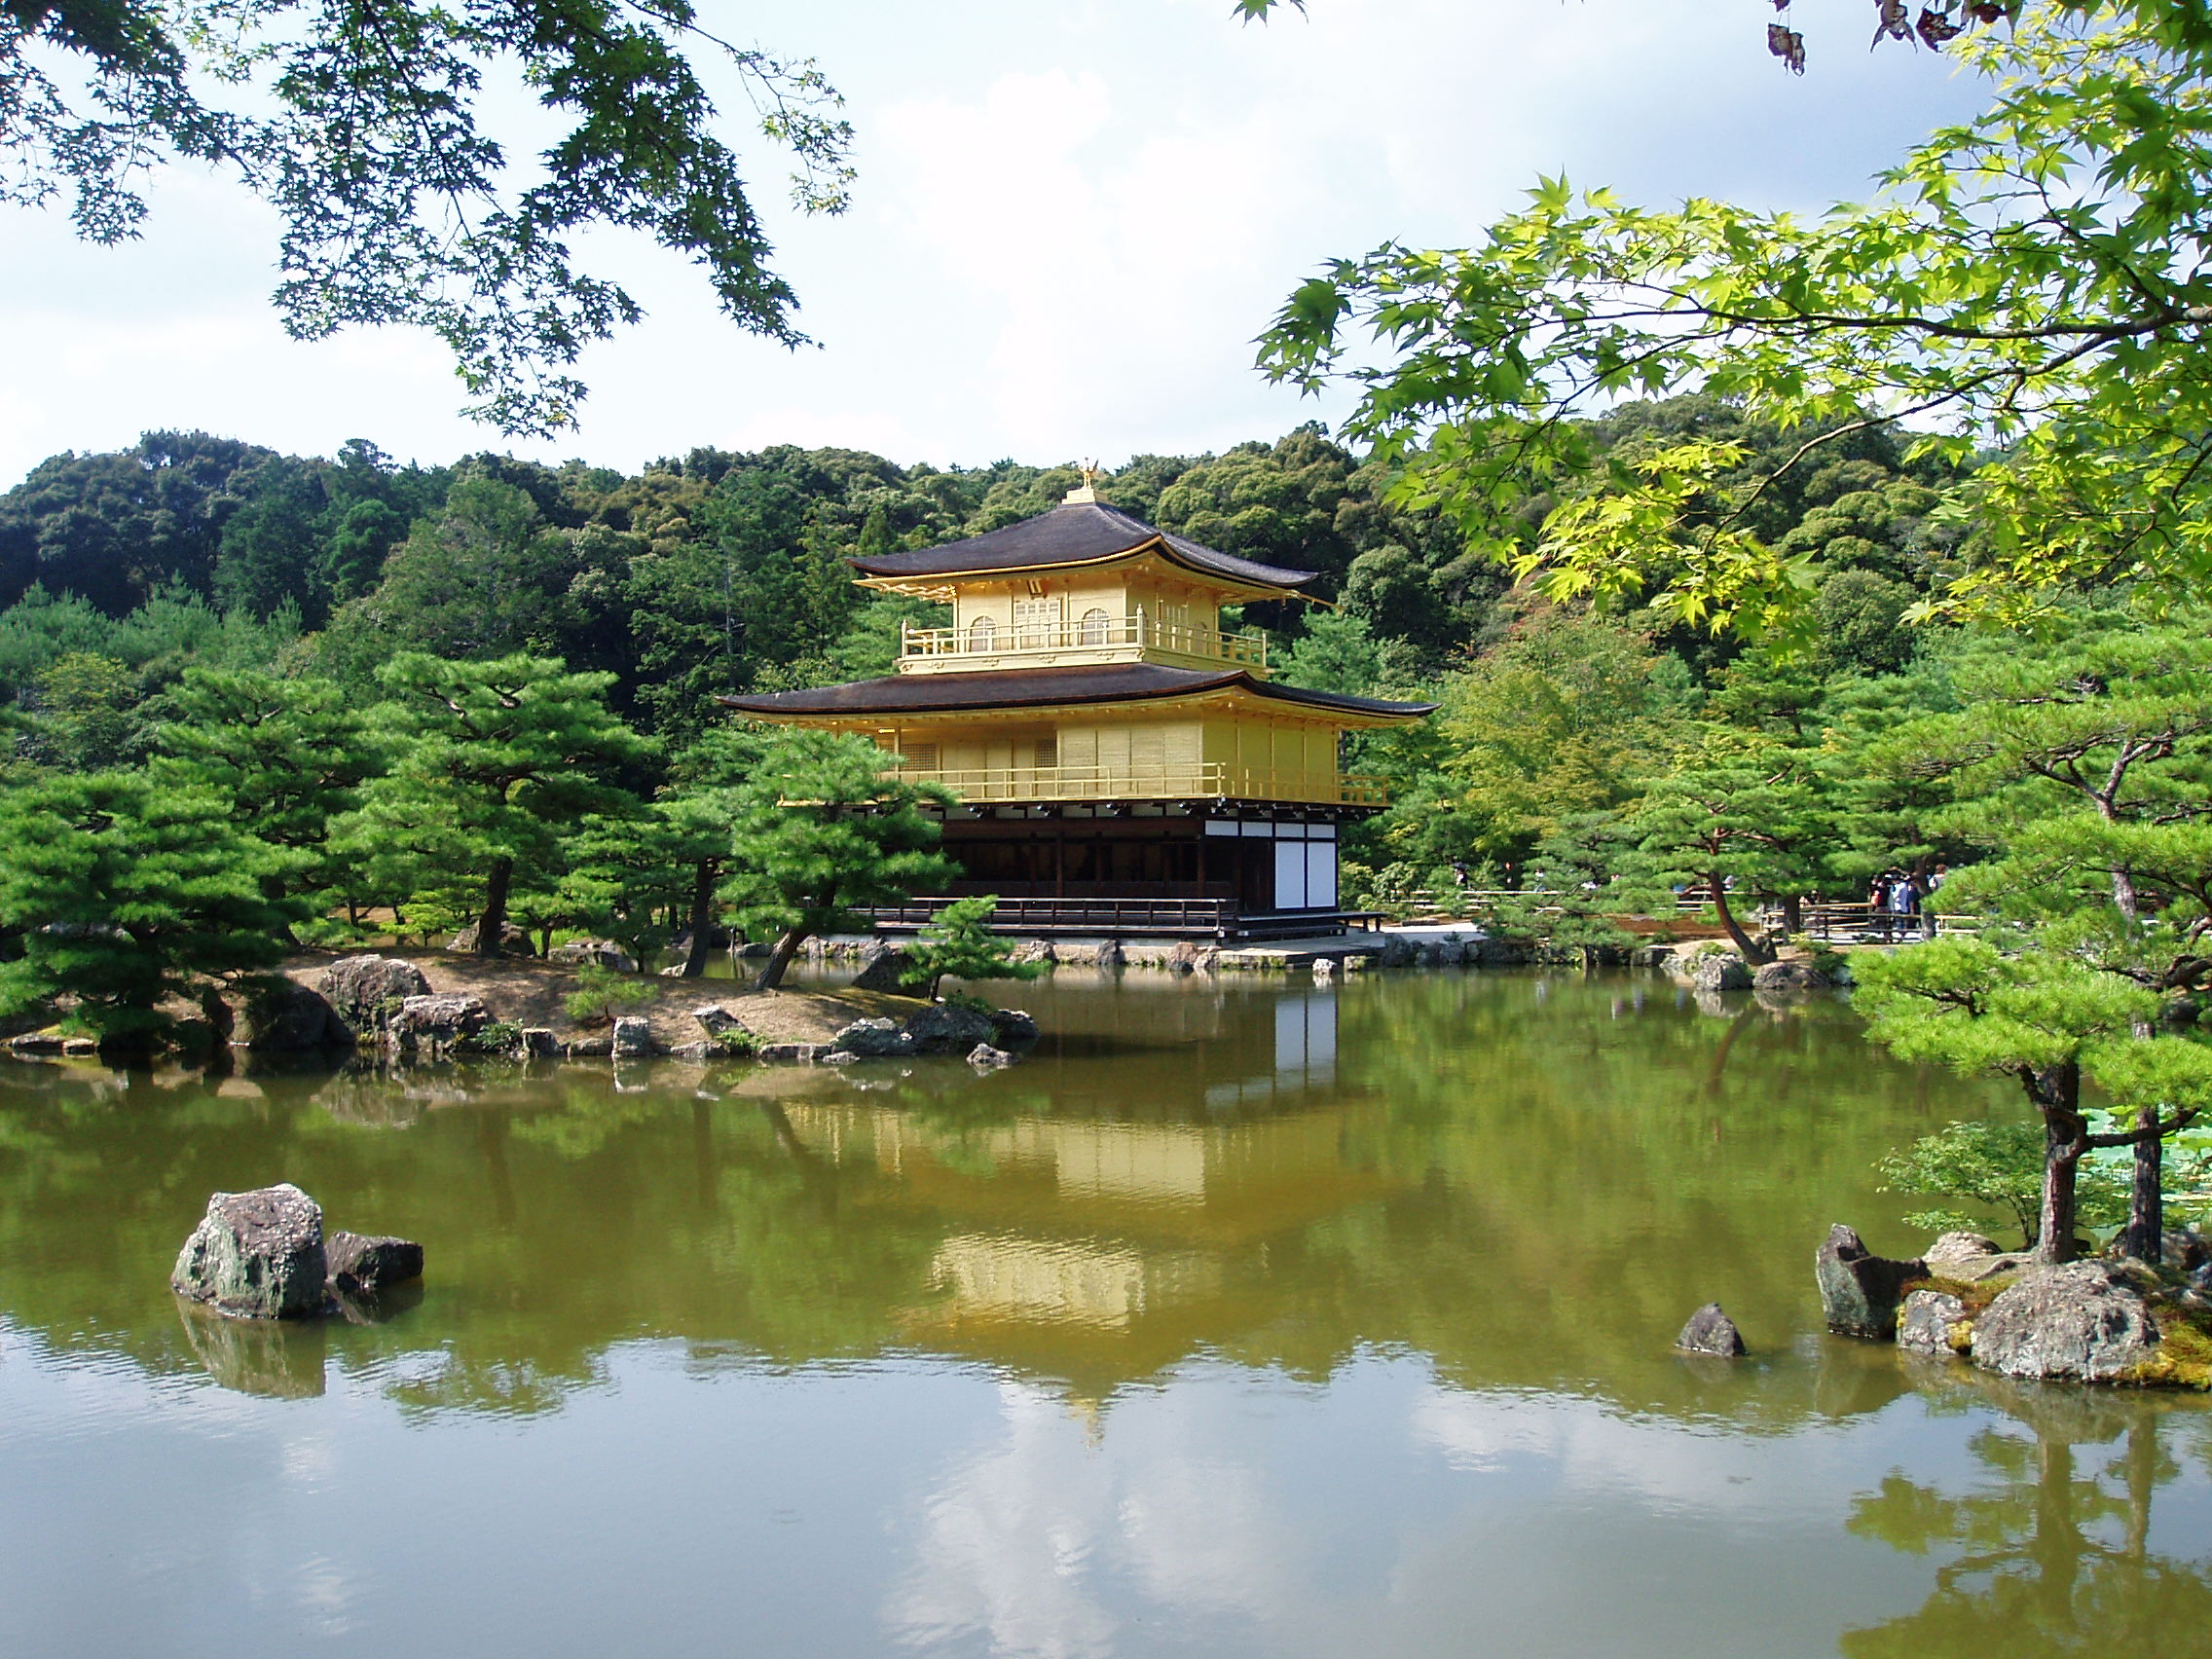 Kinkaku-ji or Golden Pavilion, Kyoto, Japan